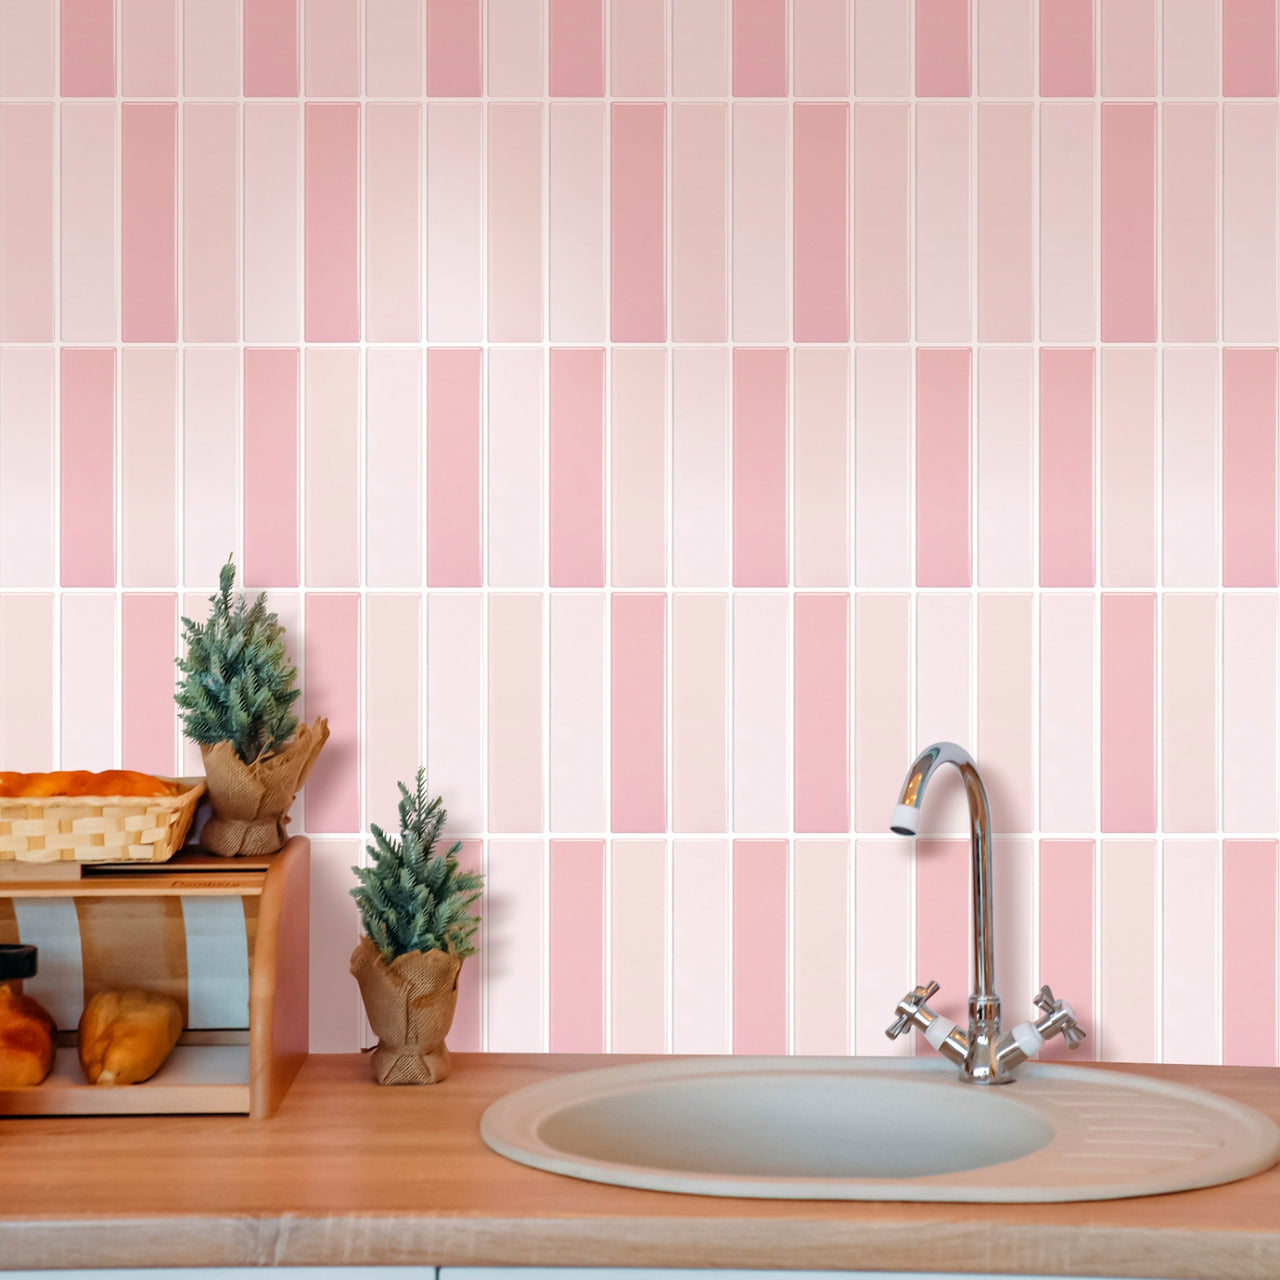 Pink peel and stick kit kat tiles as kitchen splash back